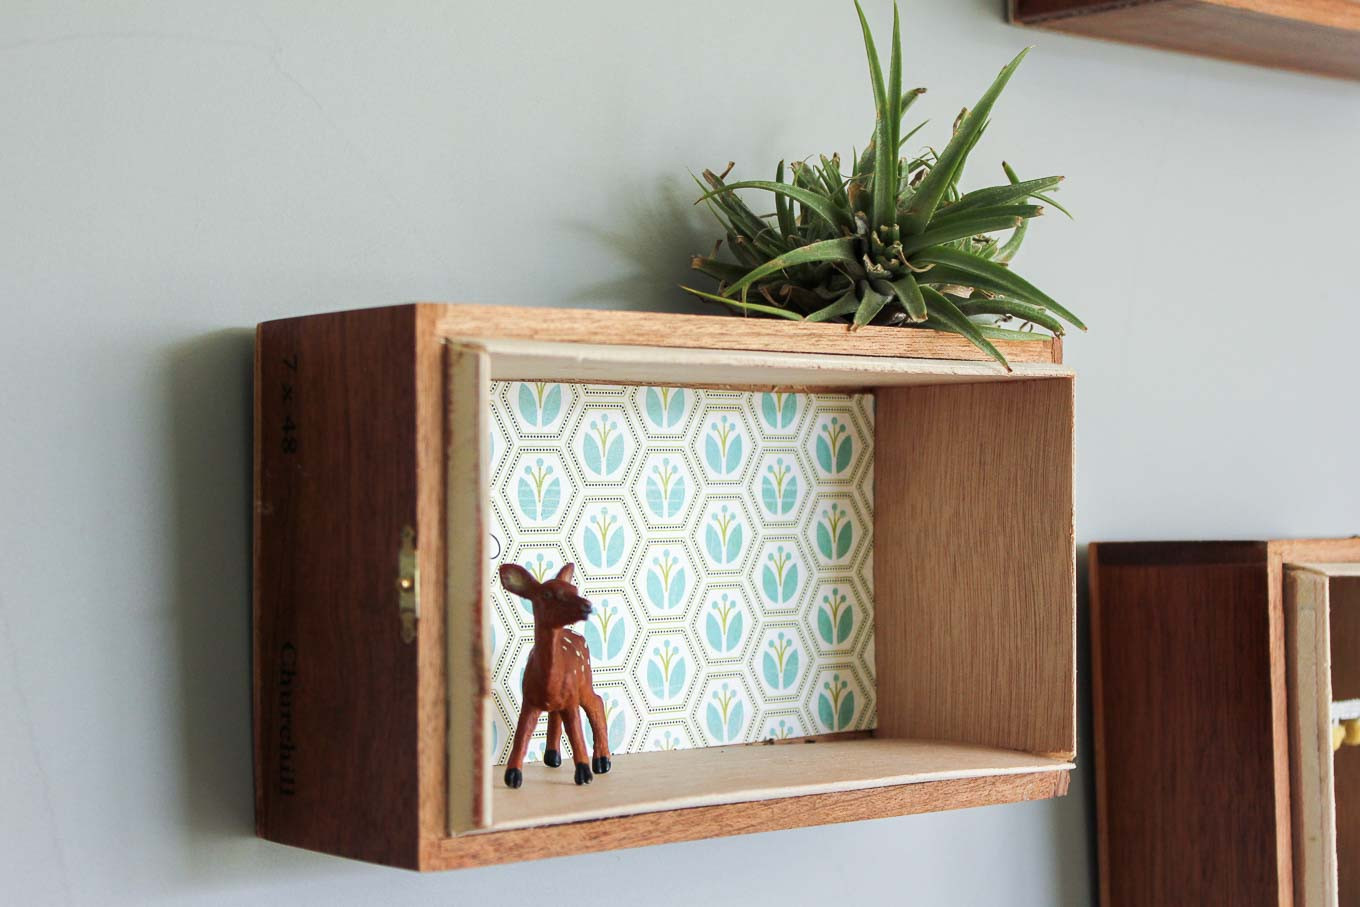 Box Shelf DIY
 Super Easy DIY Floating Box Shelves From Cigar Boxes